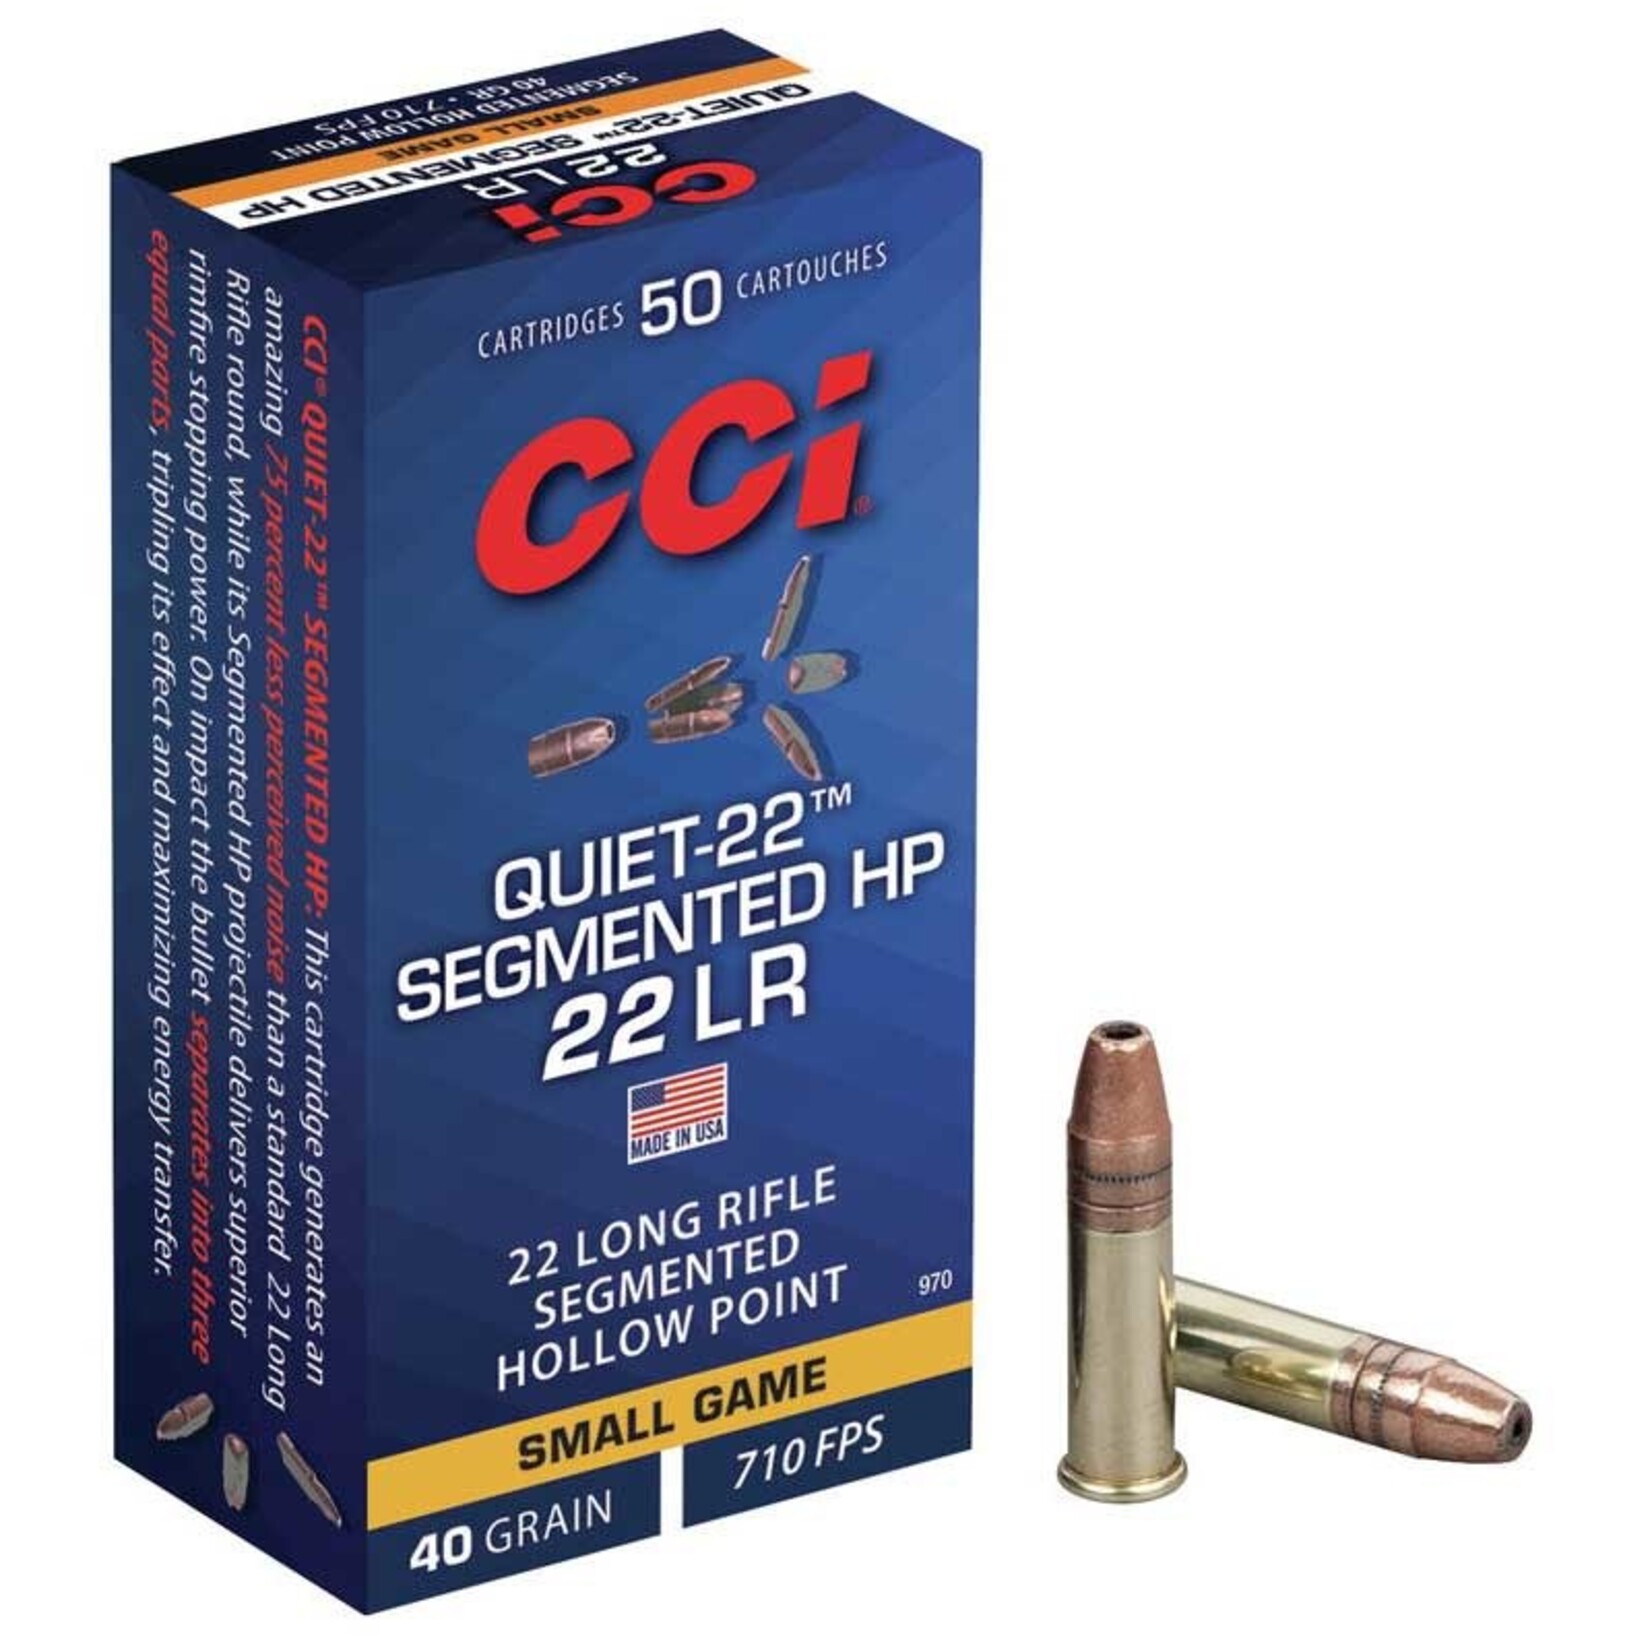 CCI CCI Quiet-22 22 LR 40 gr Segmented HP 50 rnds